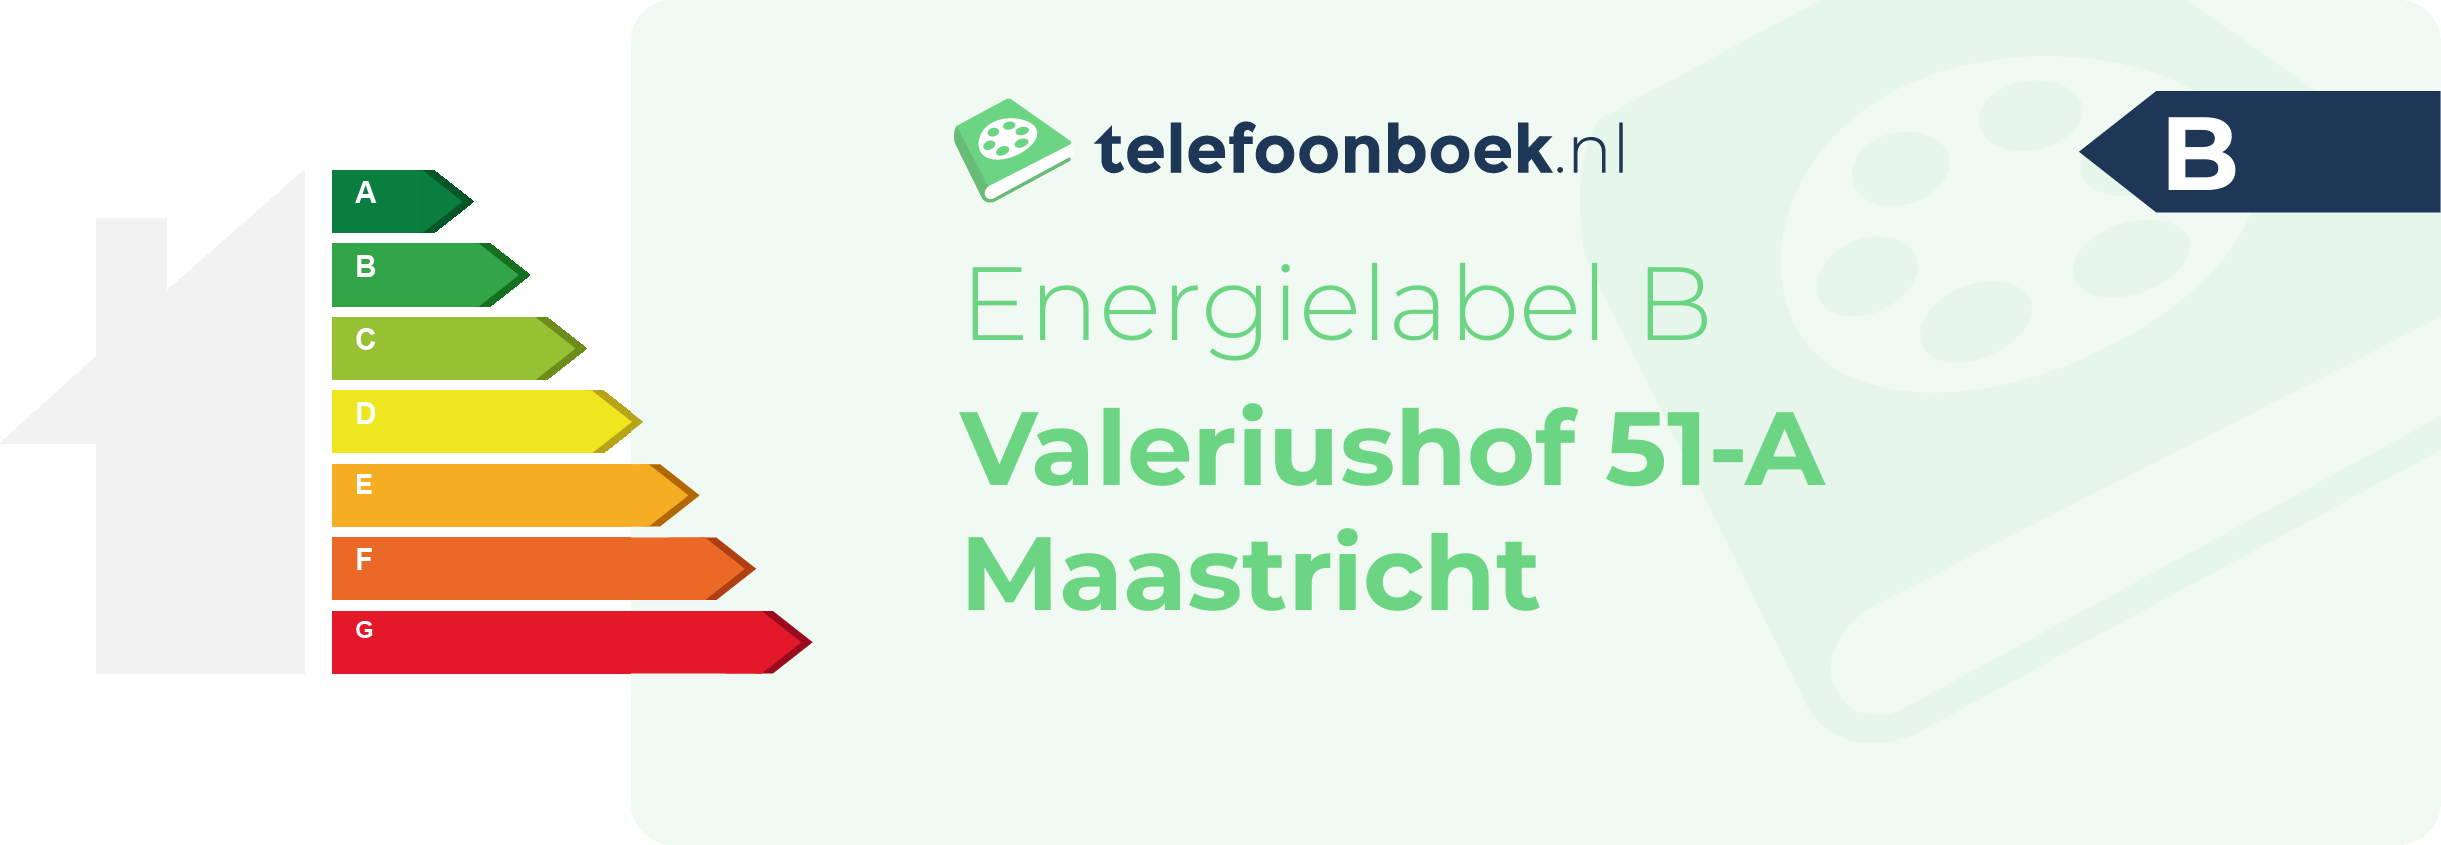 Energielabel Valeriushof 51-A Maastricht